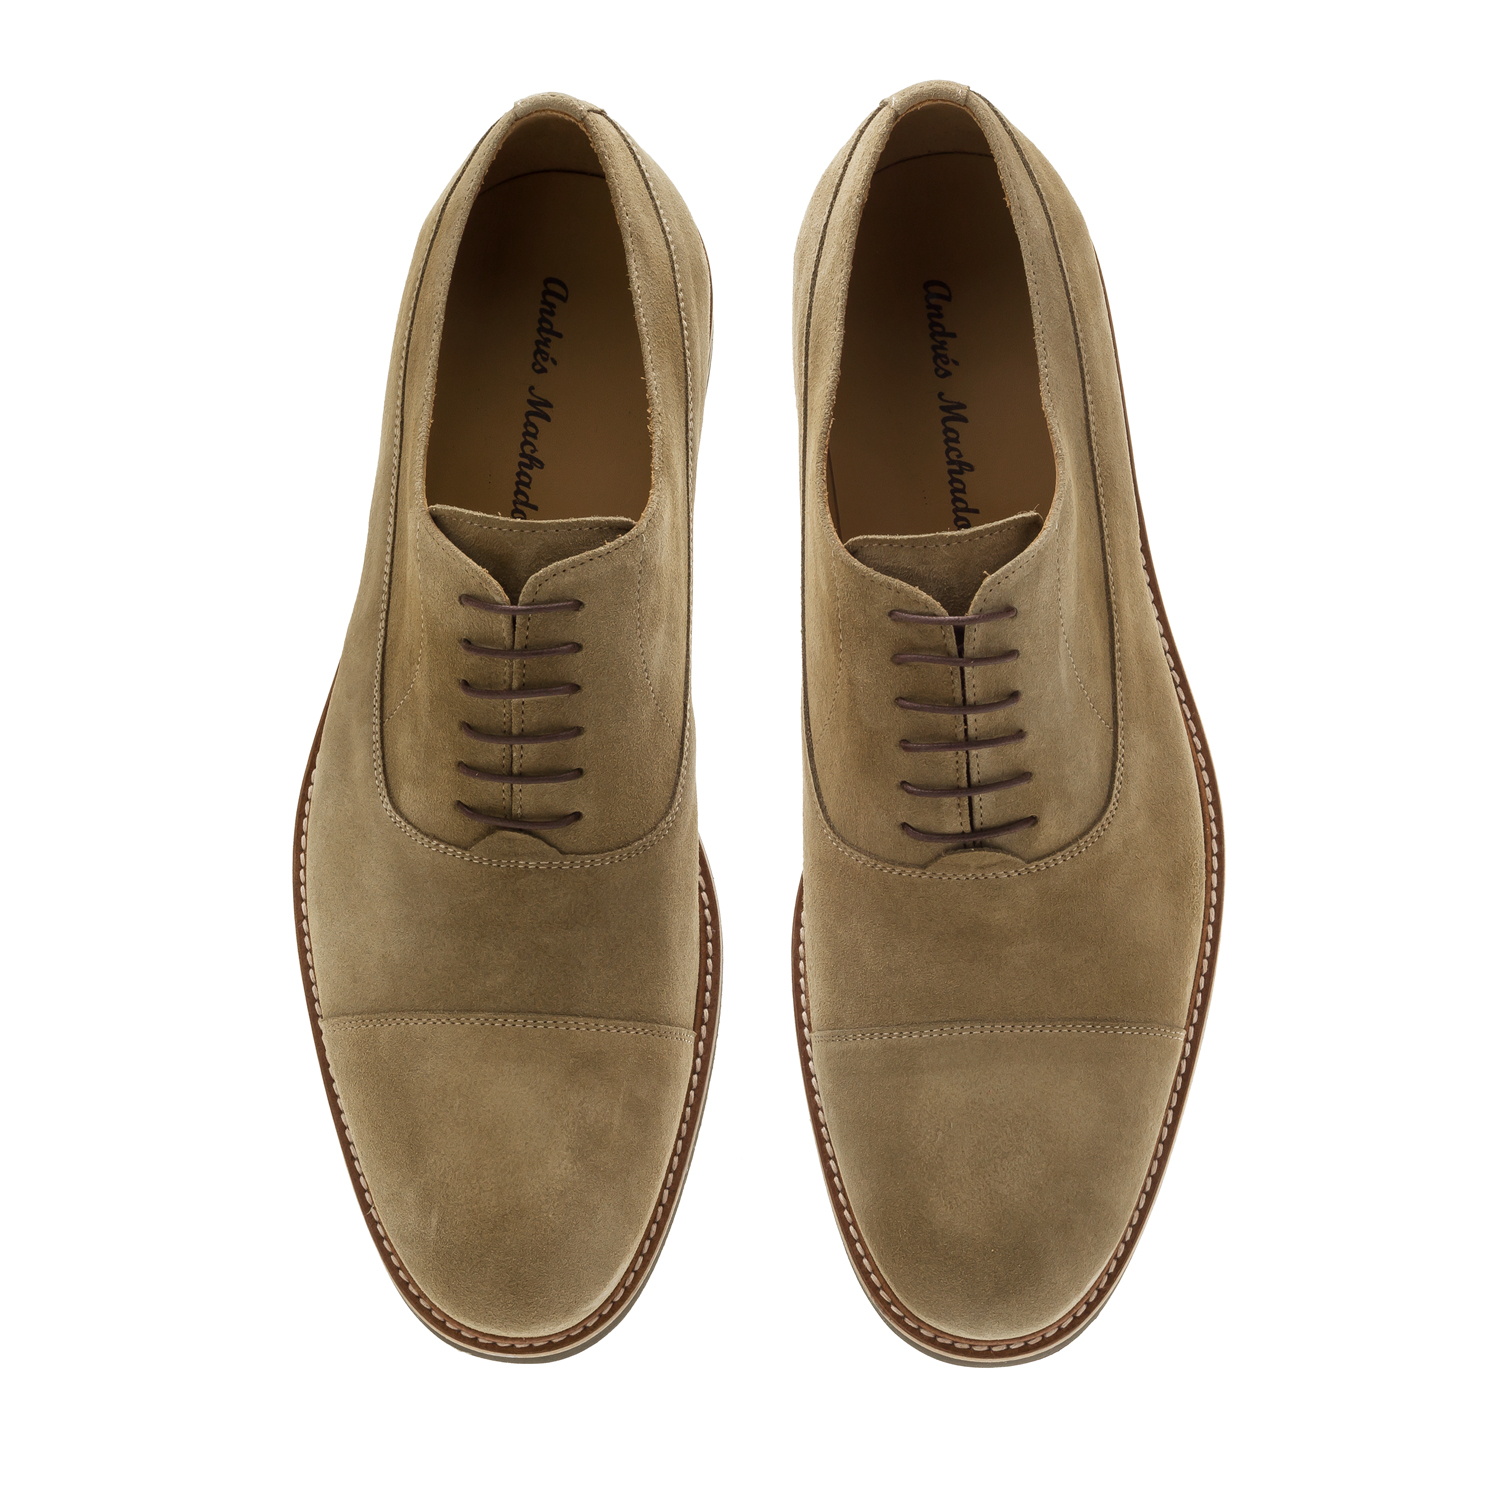 Oxford Shoes in Beige Split Leather 